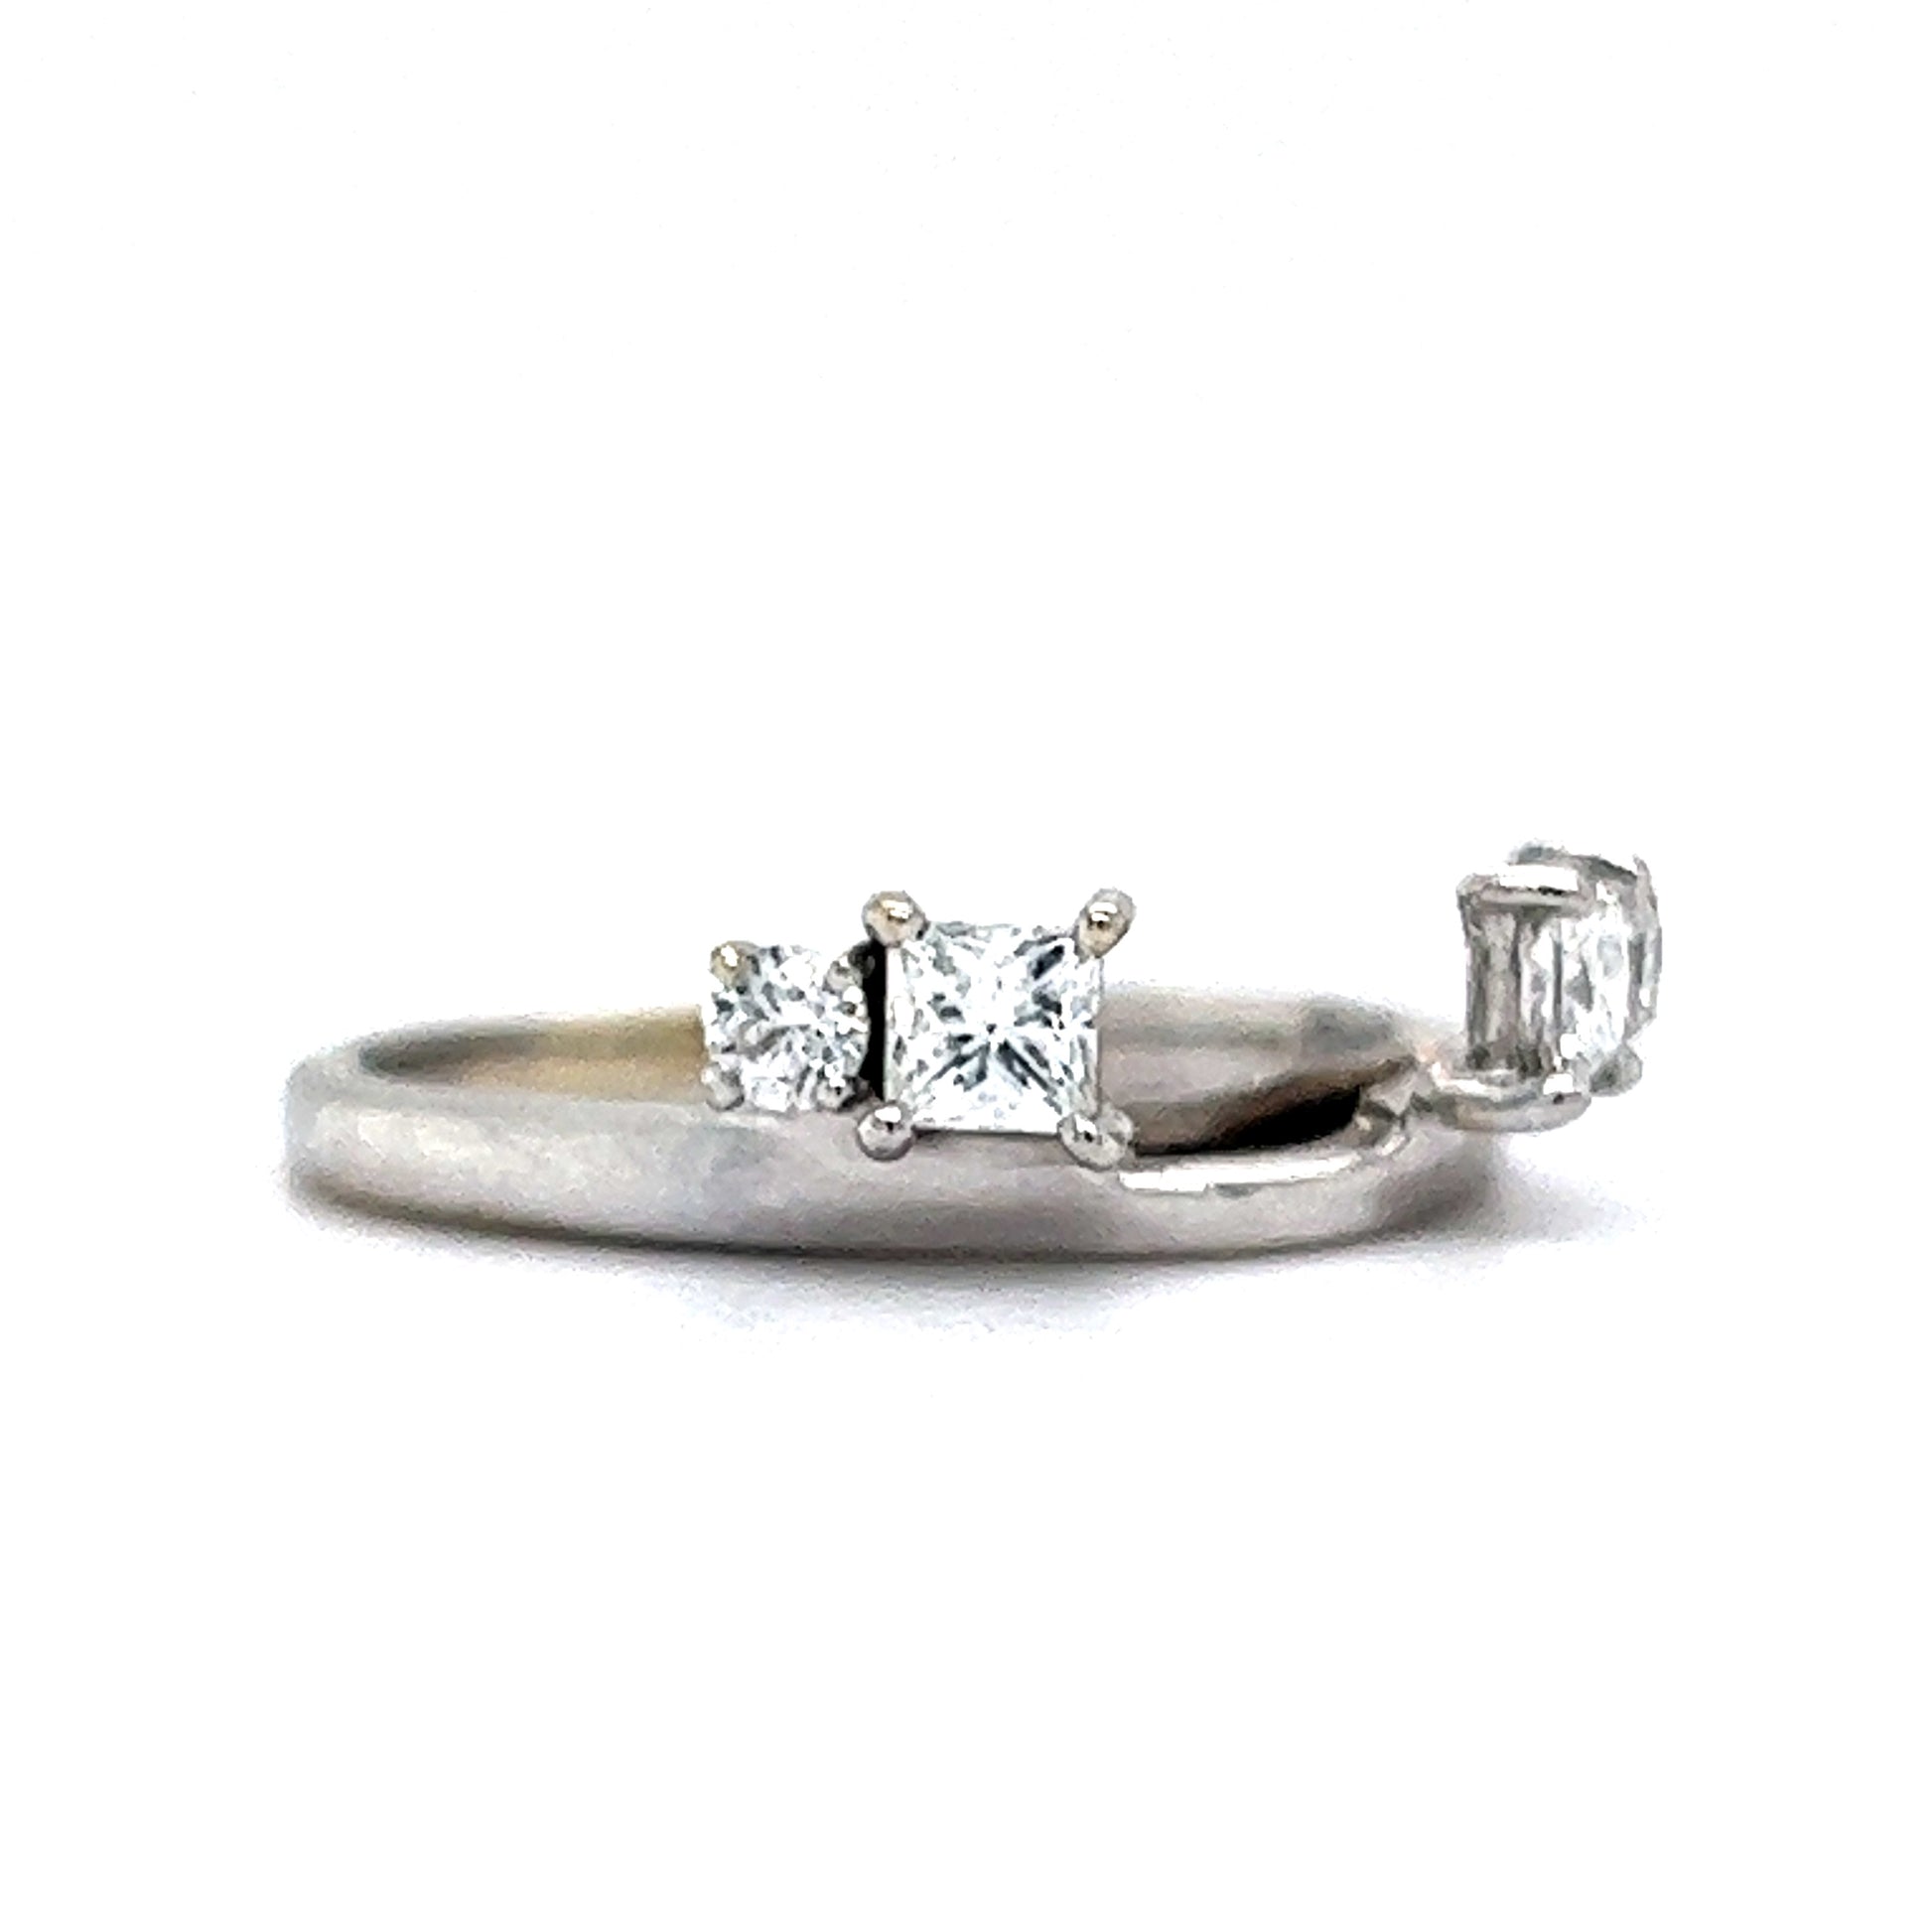 .53 Diamond Ring Enhancer in 14k White GoldComposition: 14 Karat White GoldRing Size: 6.75Total Diamond Weight: .53 ctTotal Gram Weight: 2.9 gInscription: .53 14K LSC-09